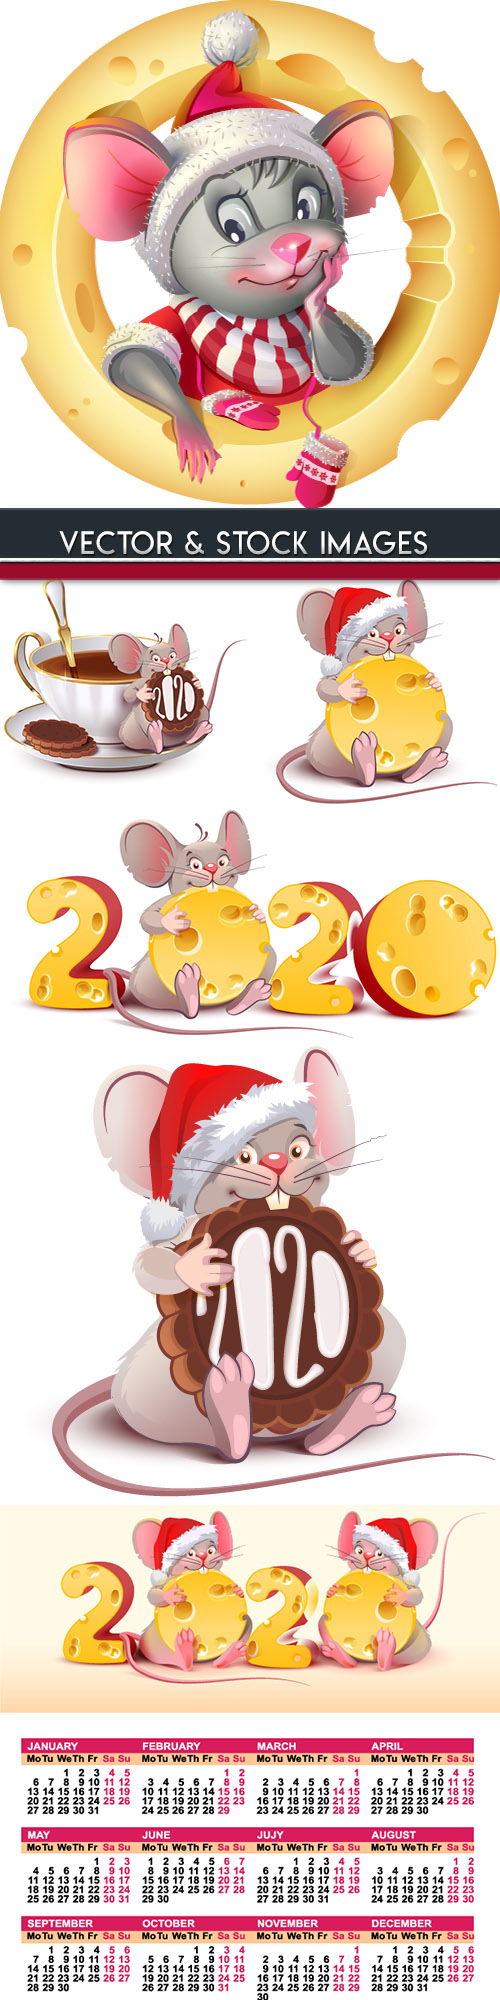 Rat cartoon symbol of New Year 2020 illustration 4